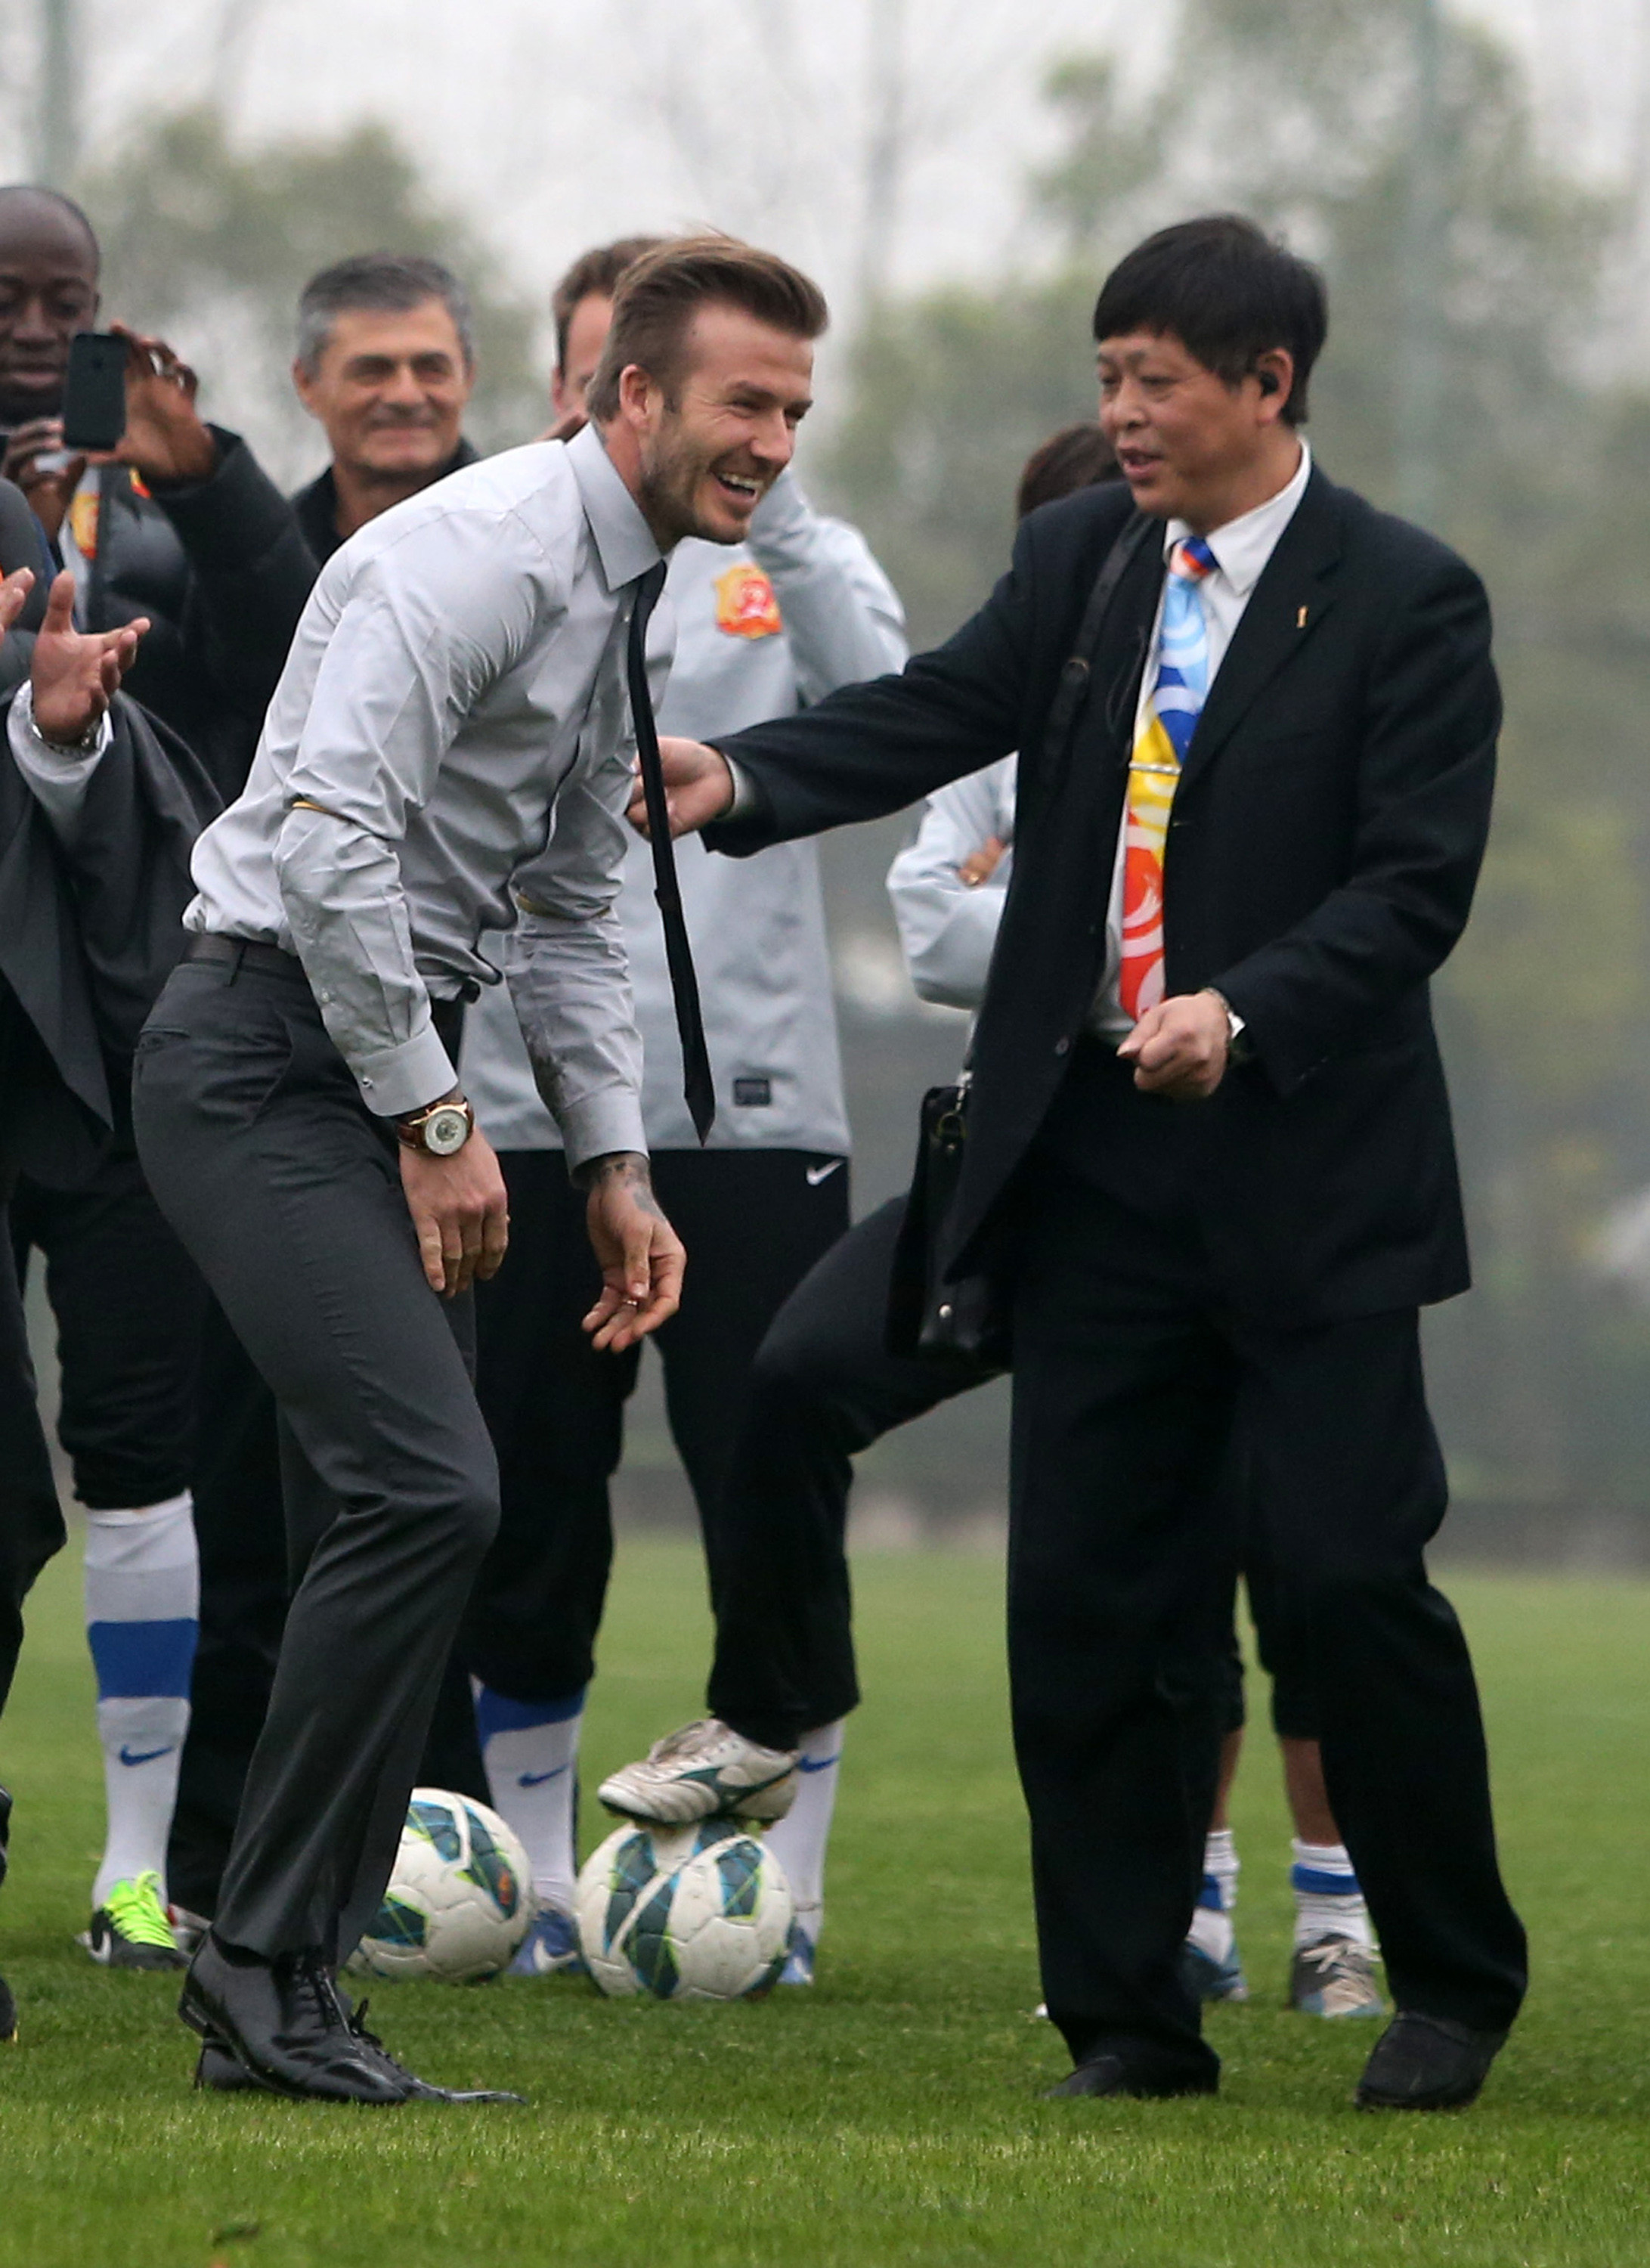 David Beckham Falls While Taking Free Kick In China, But He's A ...